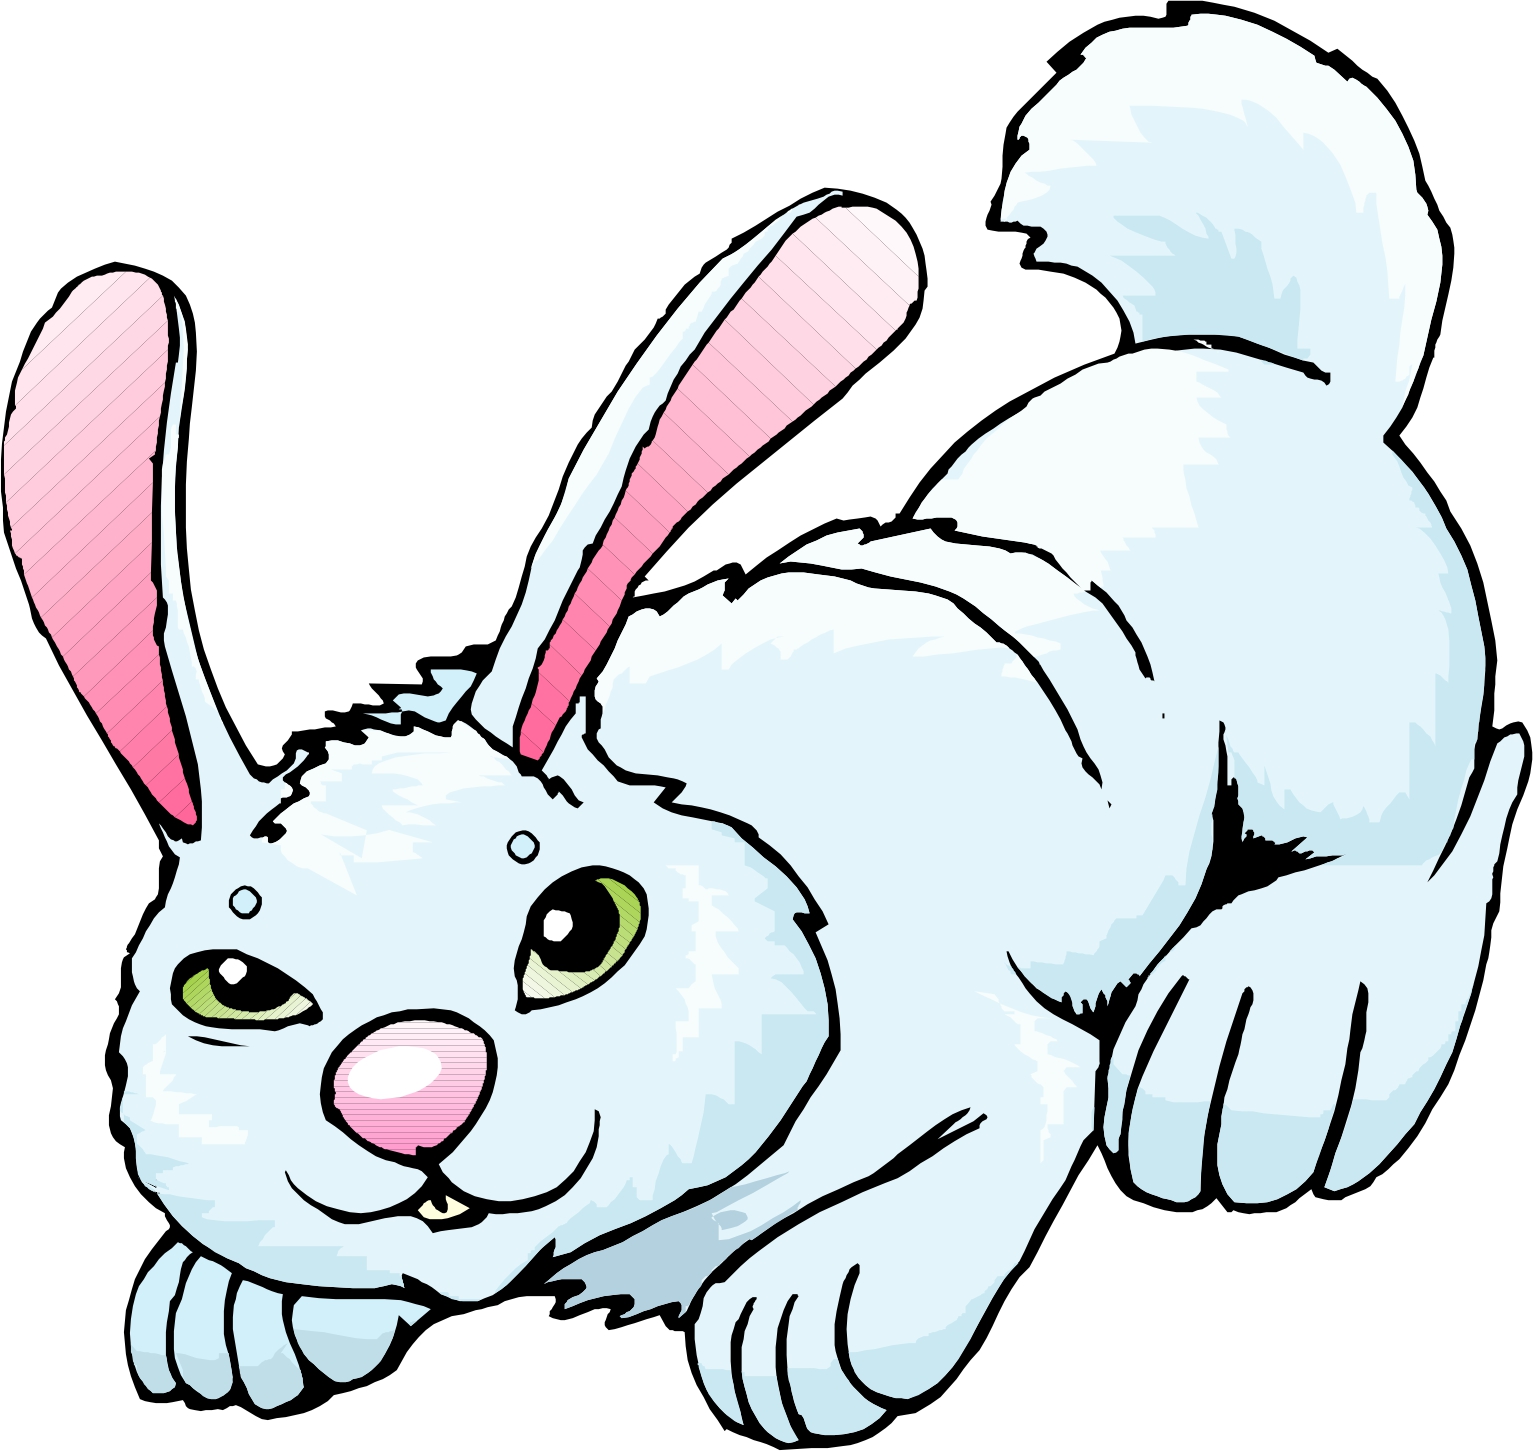 Catoon Cute Rabbit Image Free Download #3449 Wallpaper 